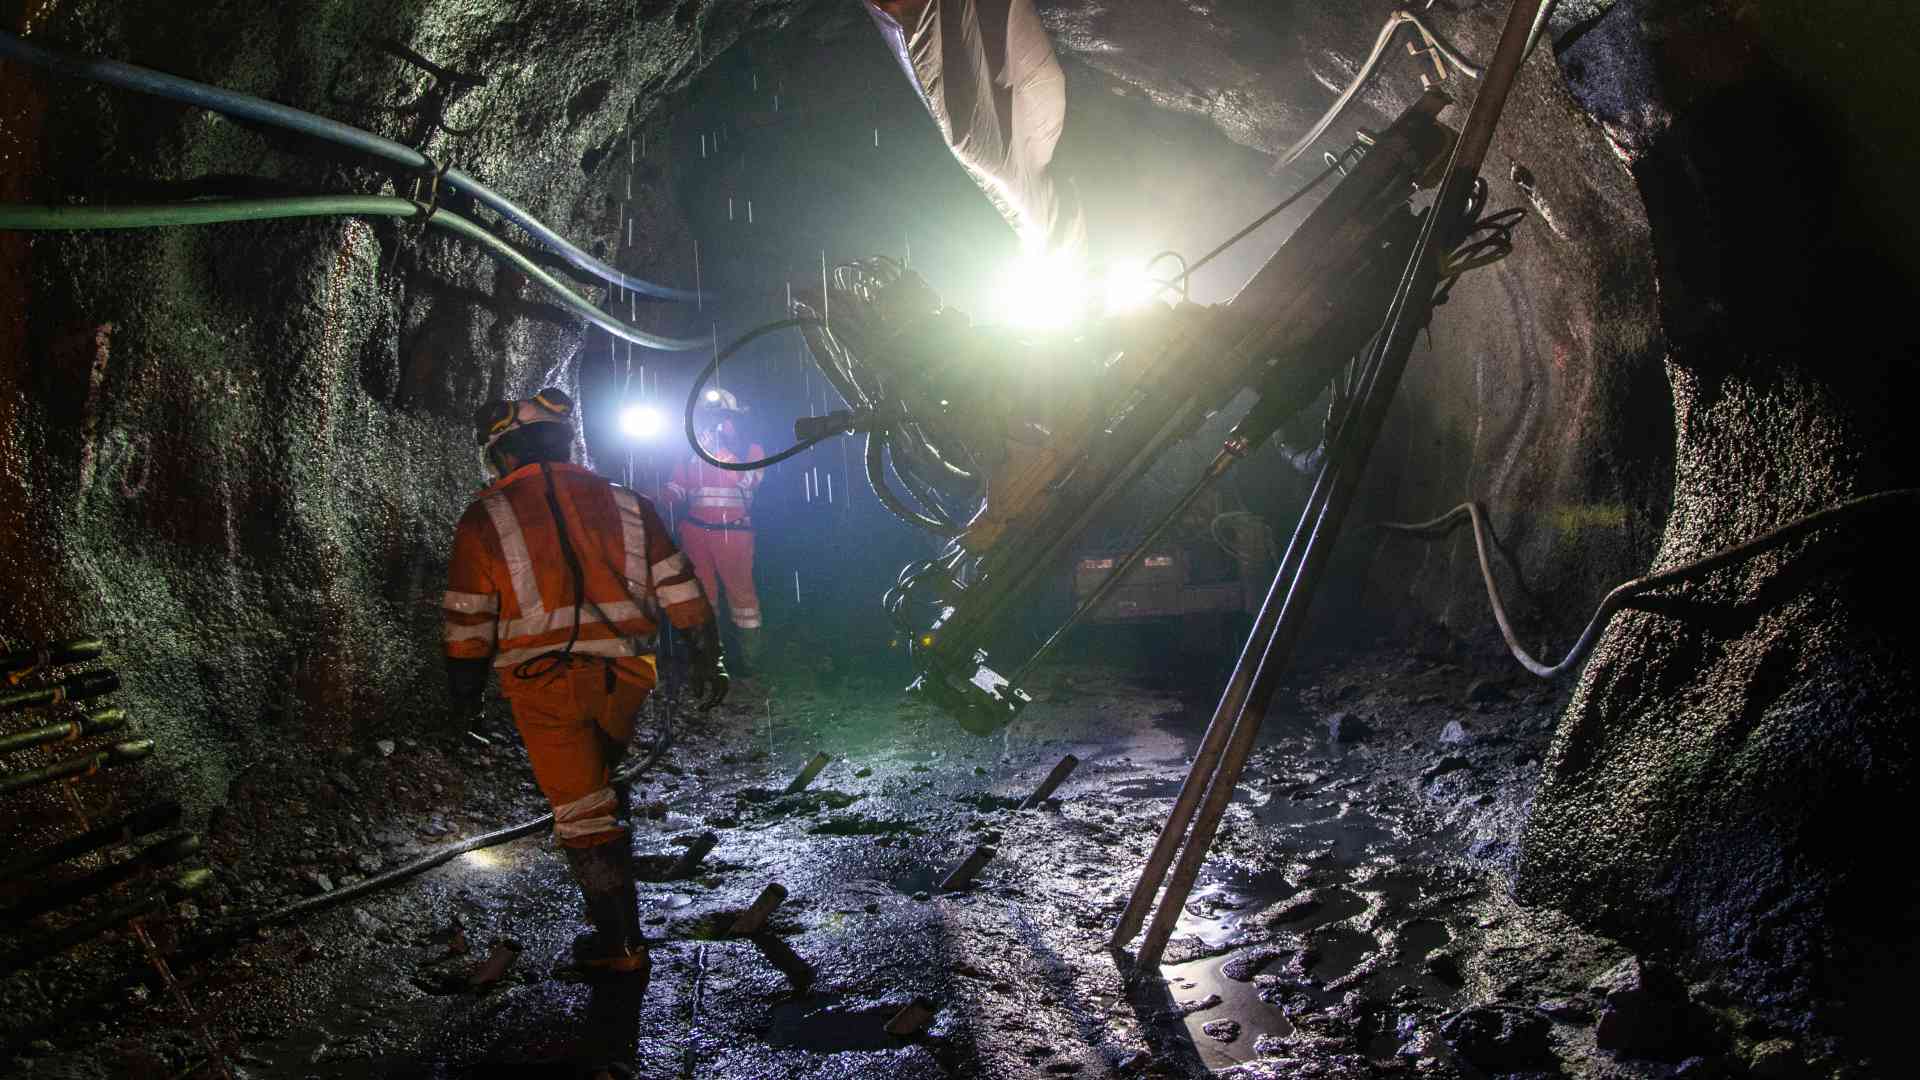 Underground soft-rock mining - Wikipedia